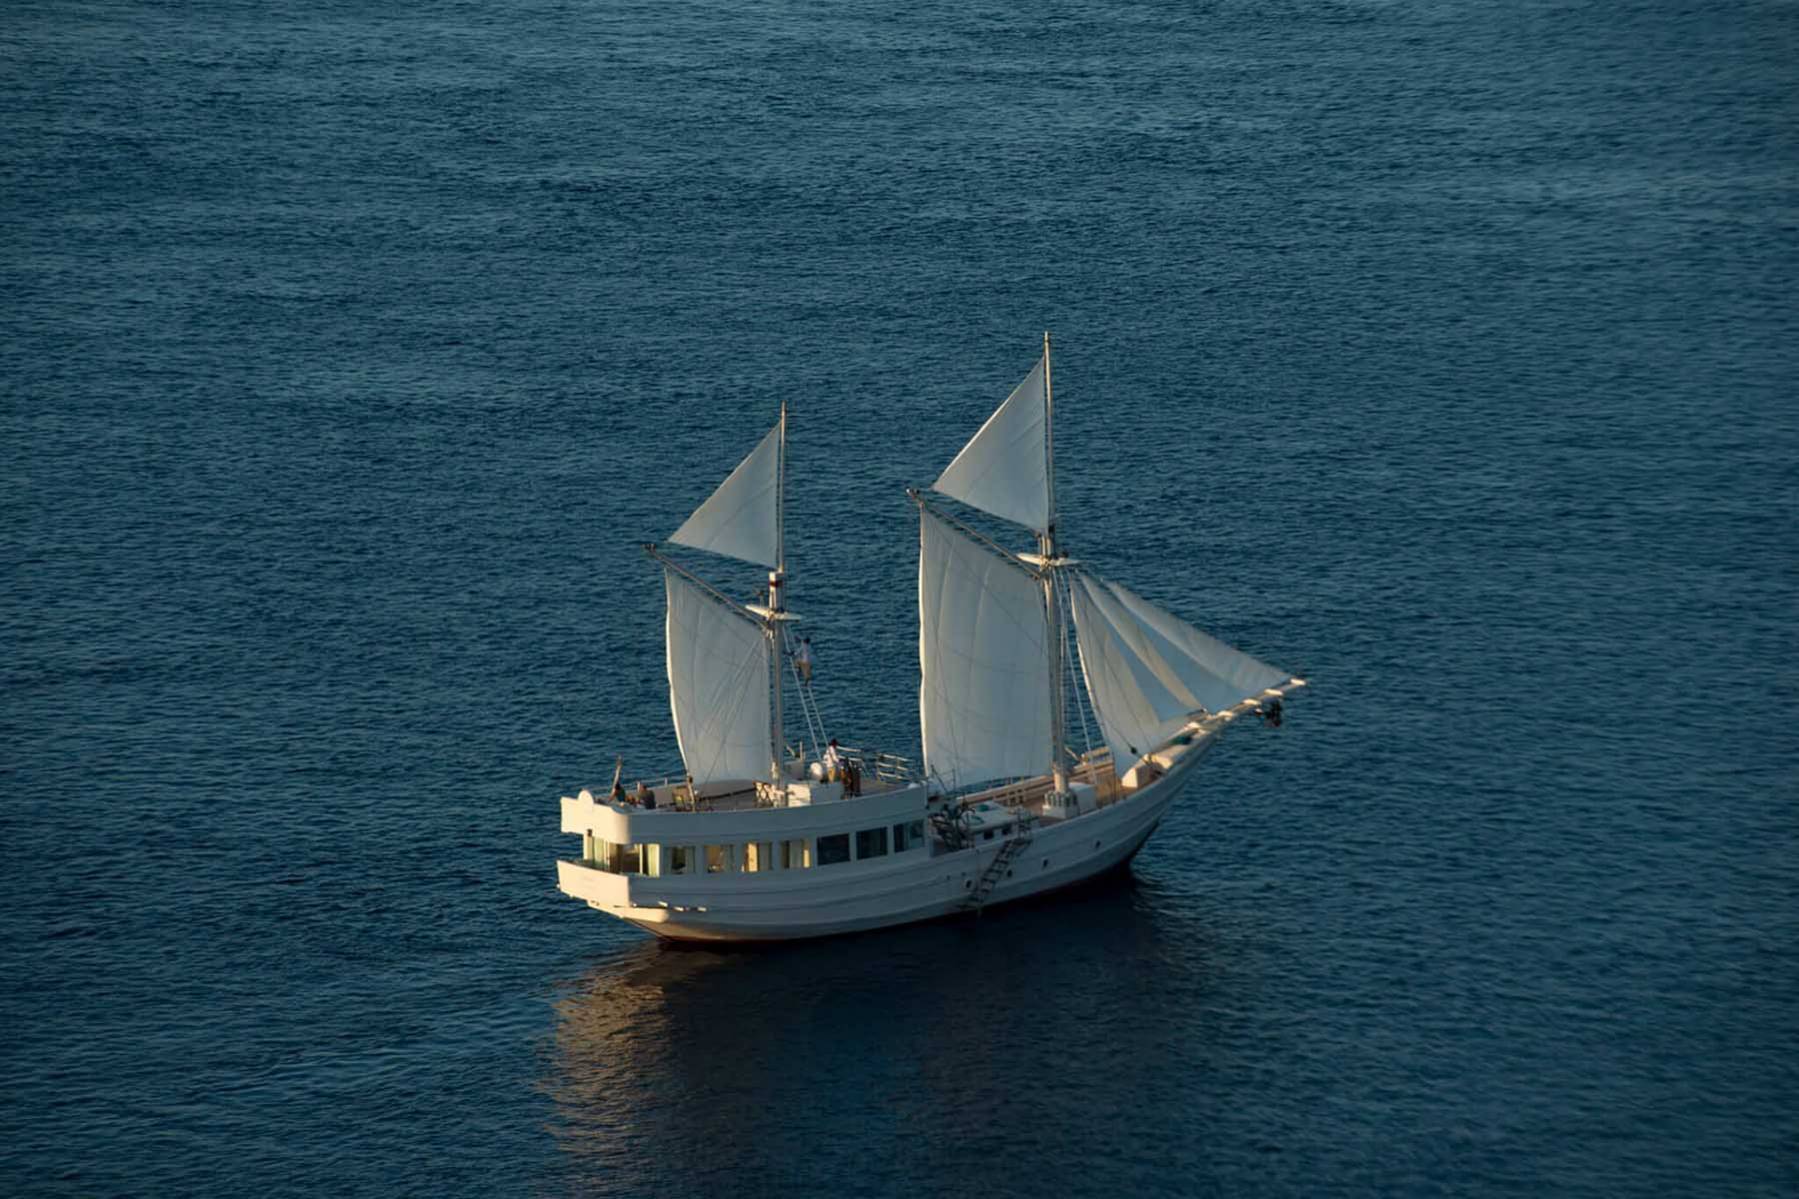 LuxeGetaways - Luxury Travel - Luxury Travel Magazine - Luxe Getaways - Luxury Lifestyle - Private Yacht - Sailing Yacht - Greece - Greek Islands - Bespoke Cruise